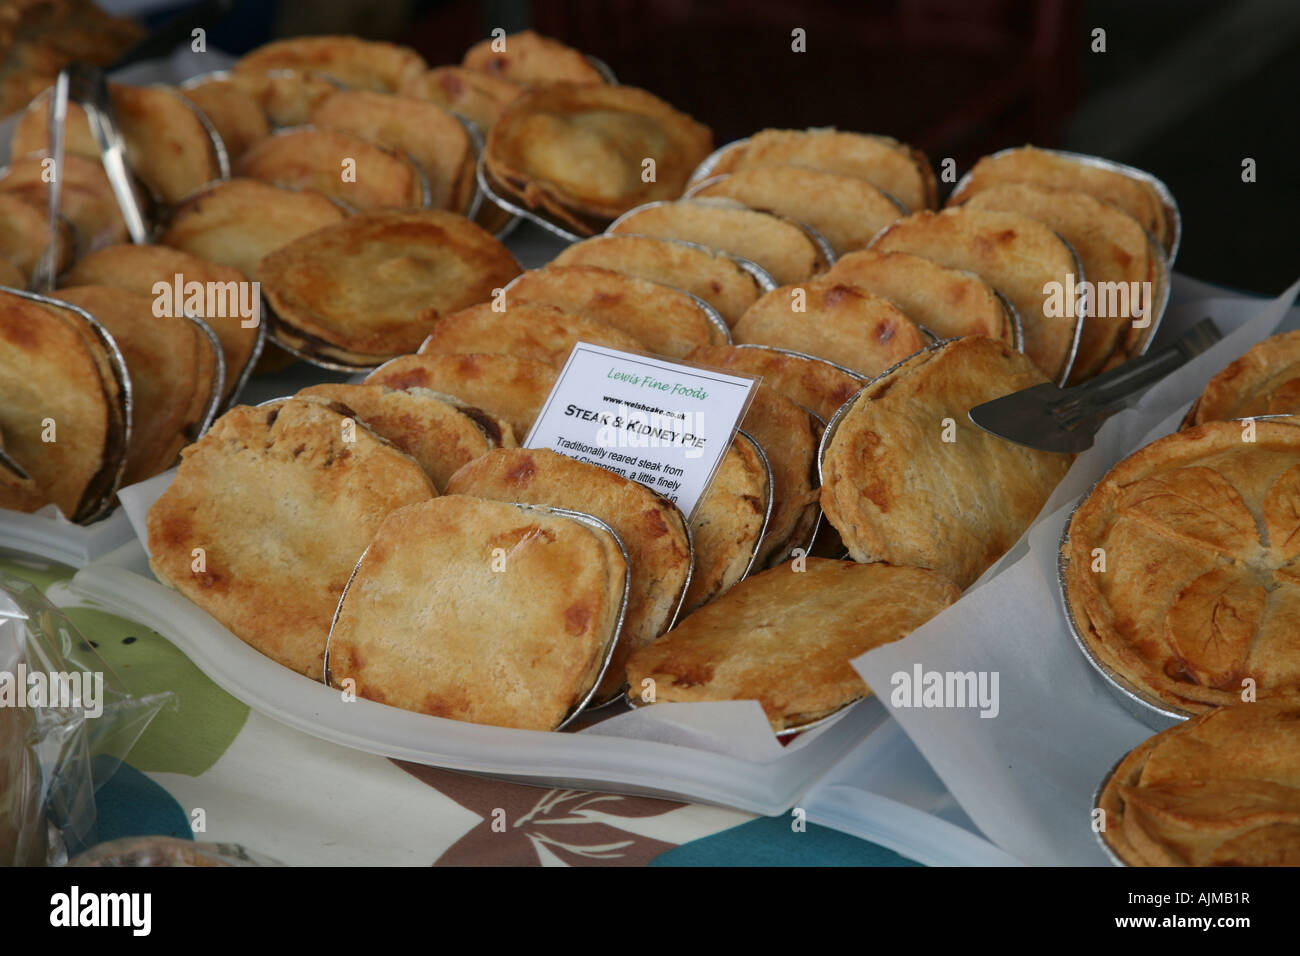 Pie display at Abergavenny farmers market, Wales Stock Photo - Alamy